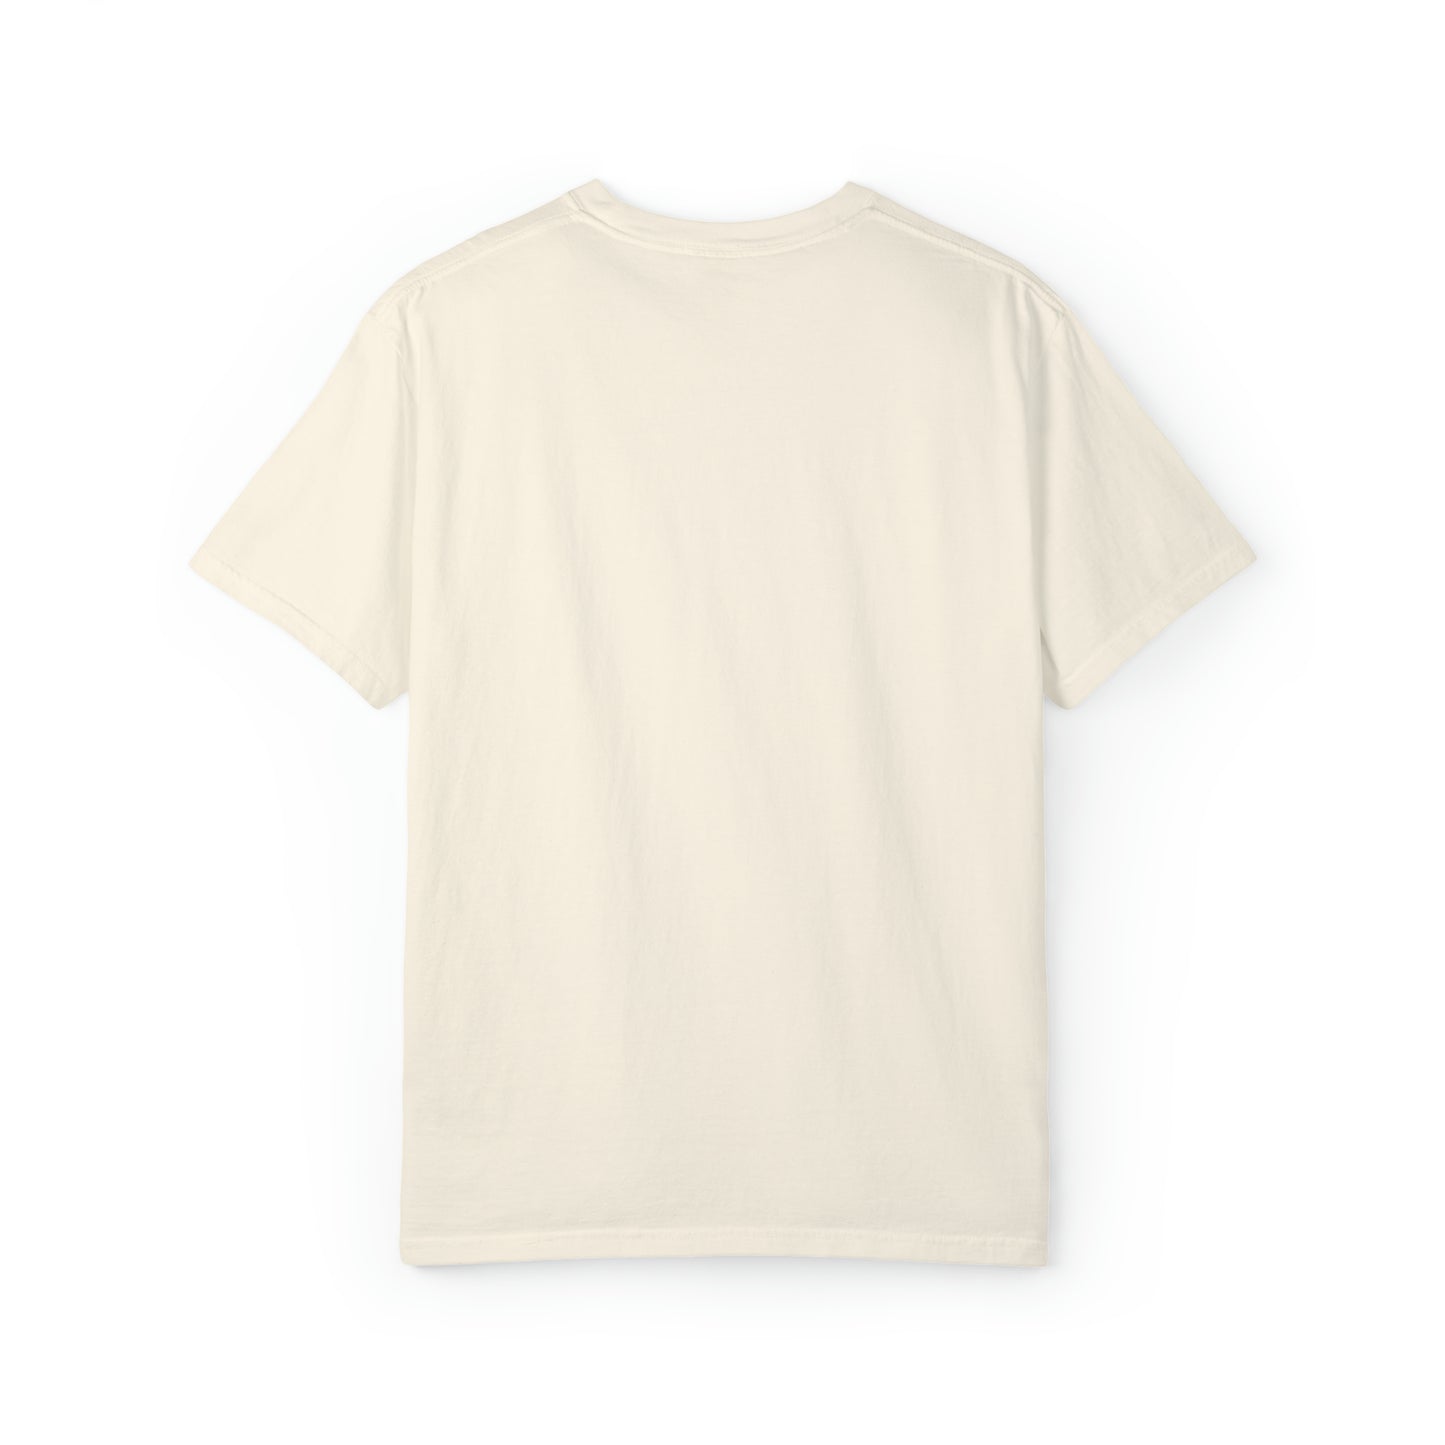 Tis The Season Pumpkin And Ghost Unisex Garment-Dyed T-shirt